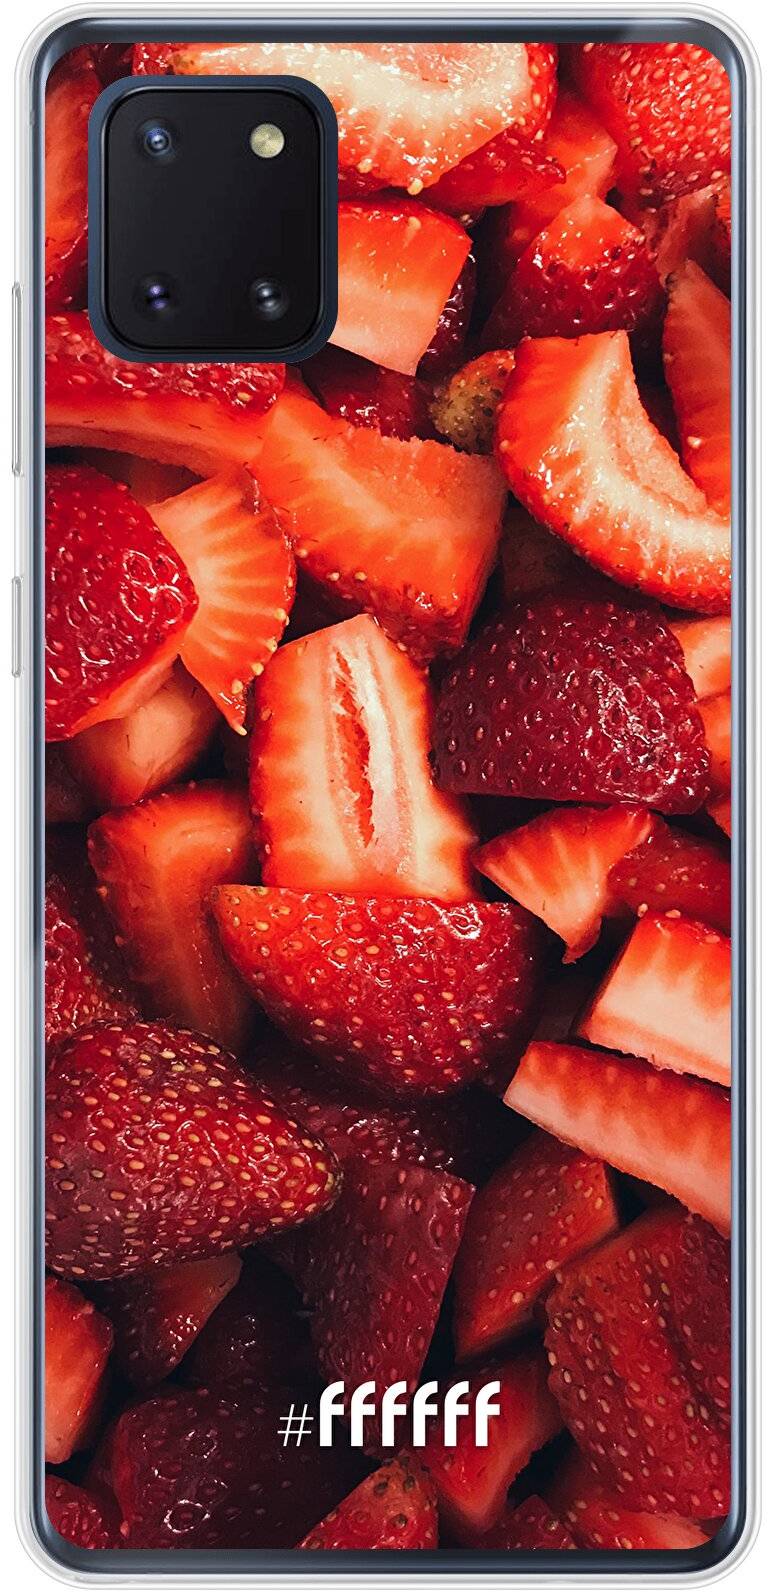 Strawberry Fields Galaxy Note 10 Lite